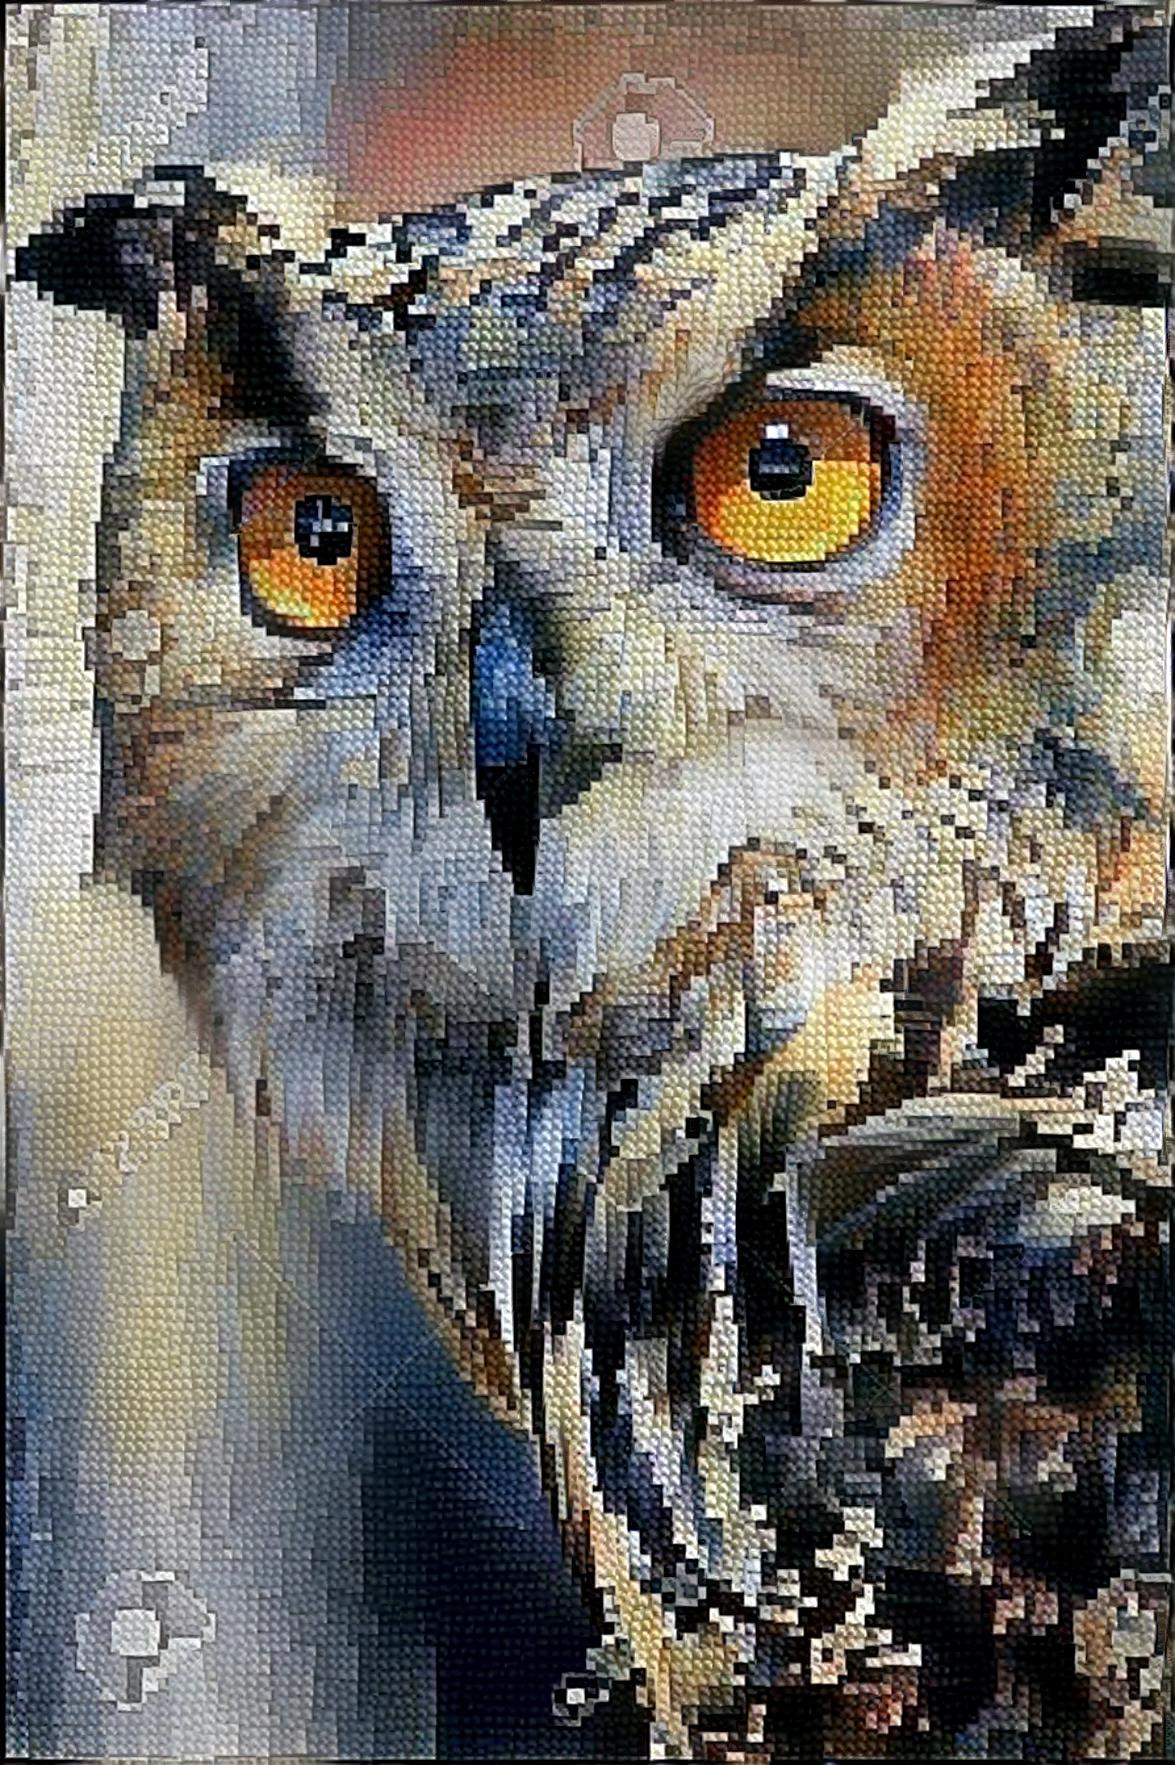 Owl 